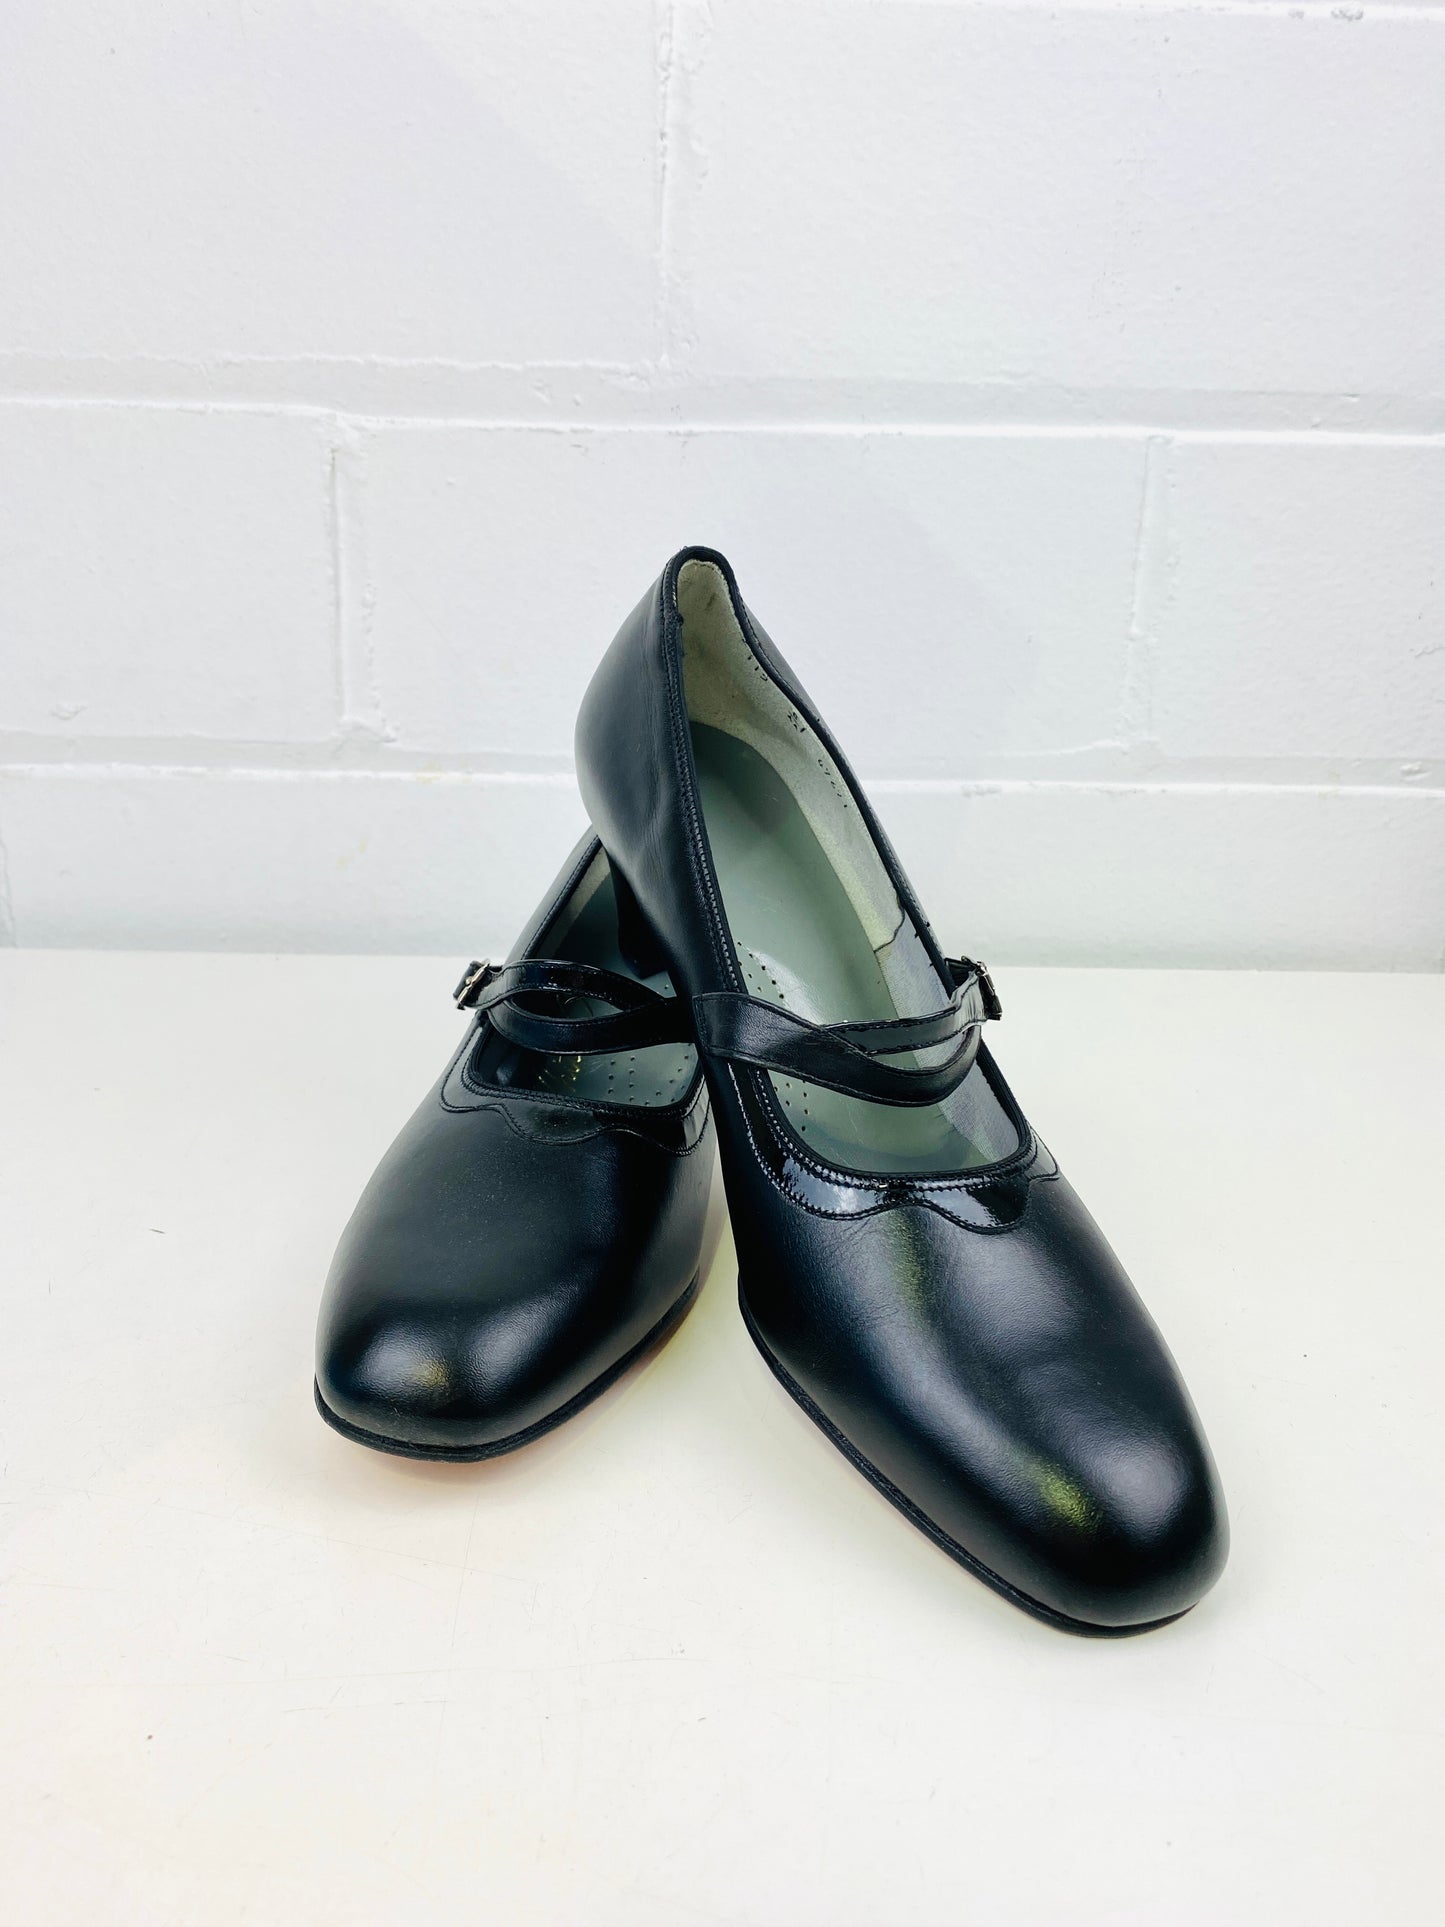 Vintage Deadstock Shoes, Women's 1980s Black Leather Mid-Heel Pumps, NOS, 8292